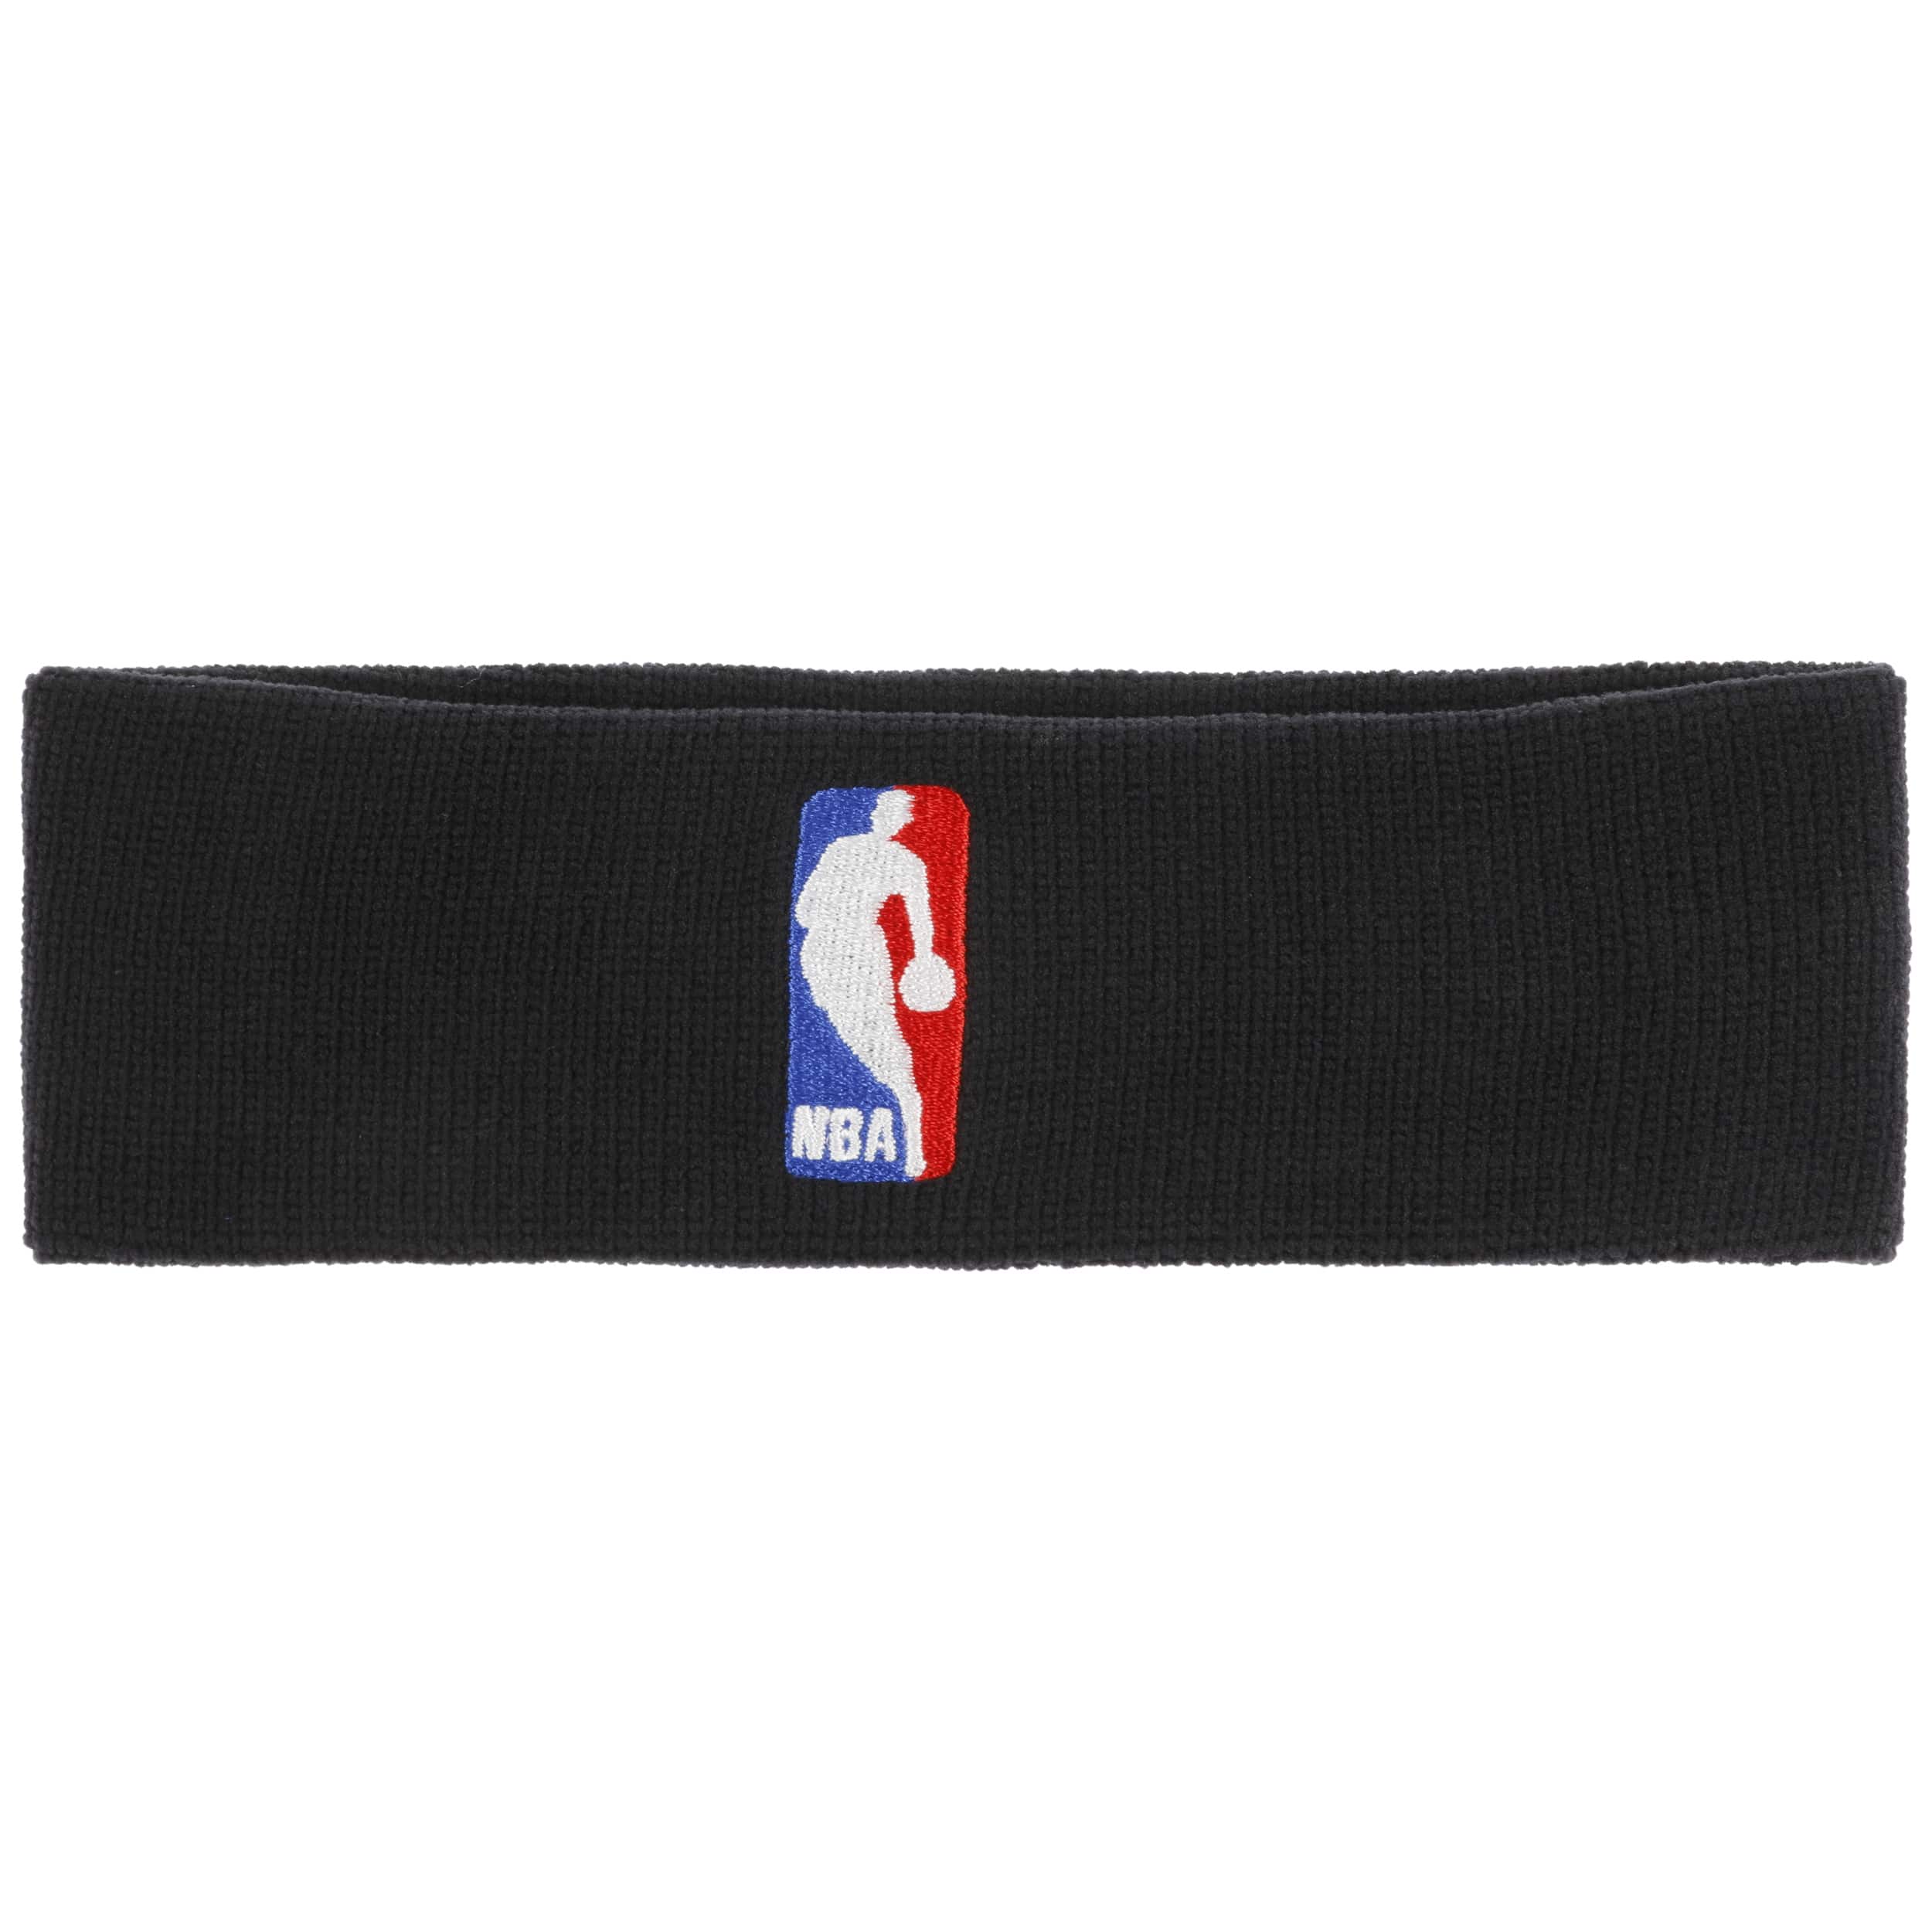 Elite NBA Headband by Nike - 24,95 €